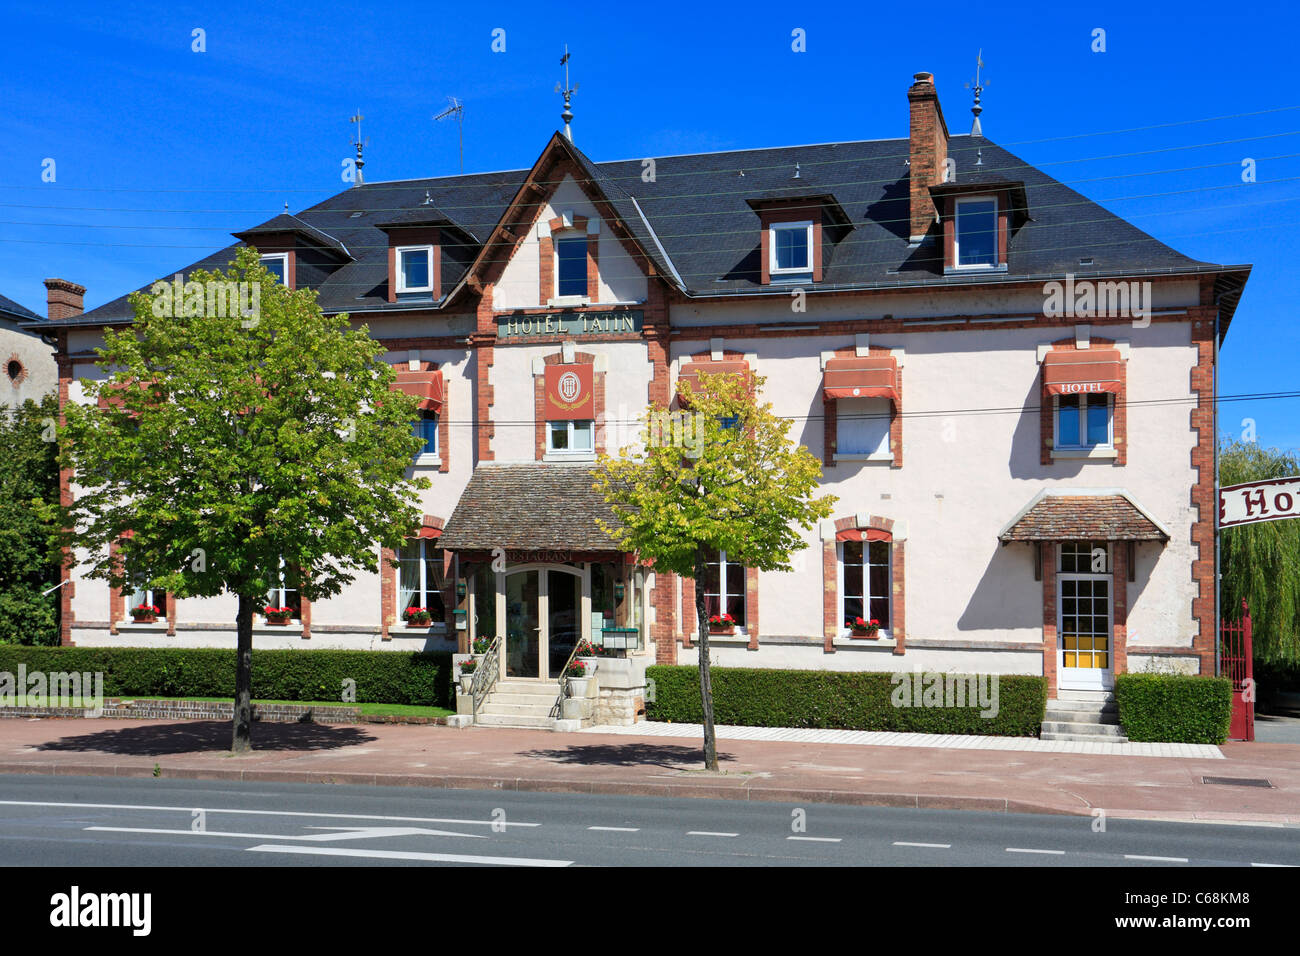 Hotel Tatin where Tarte Tatin was first created in 1889, Lamotte Beuvron, Sologne, France, Europe. Stock Photo